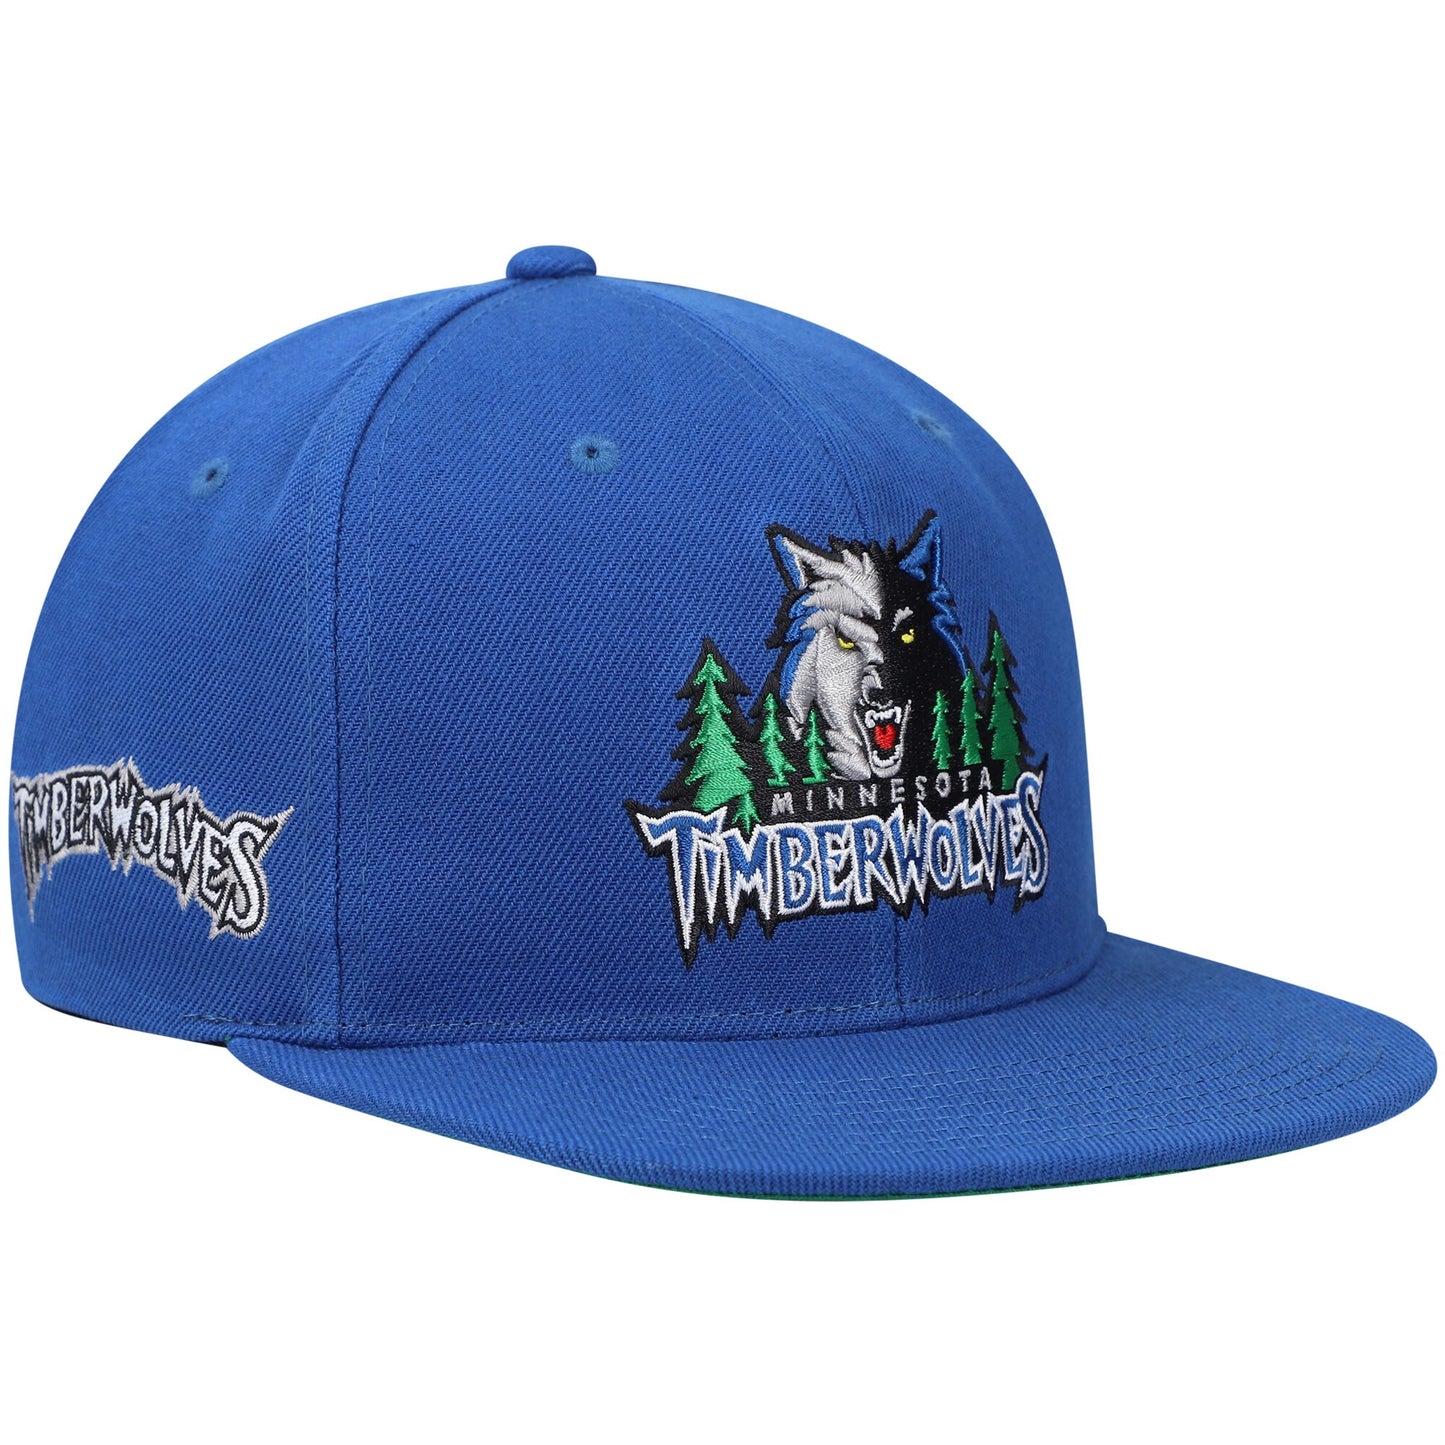 Minnesota Timberwolves Mitchell & Ness Hardwood Classics Snapback Hat - Blue